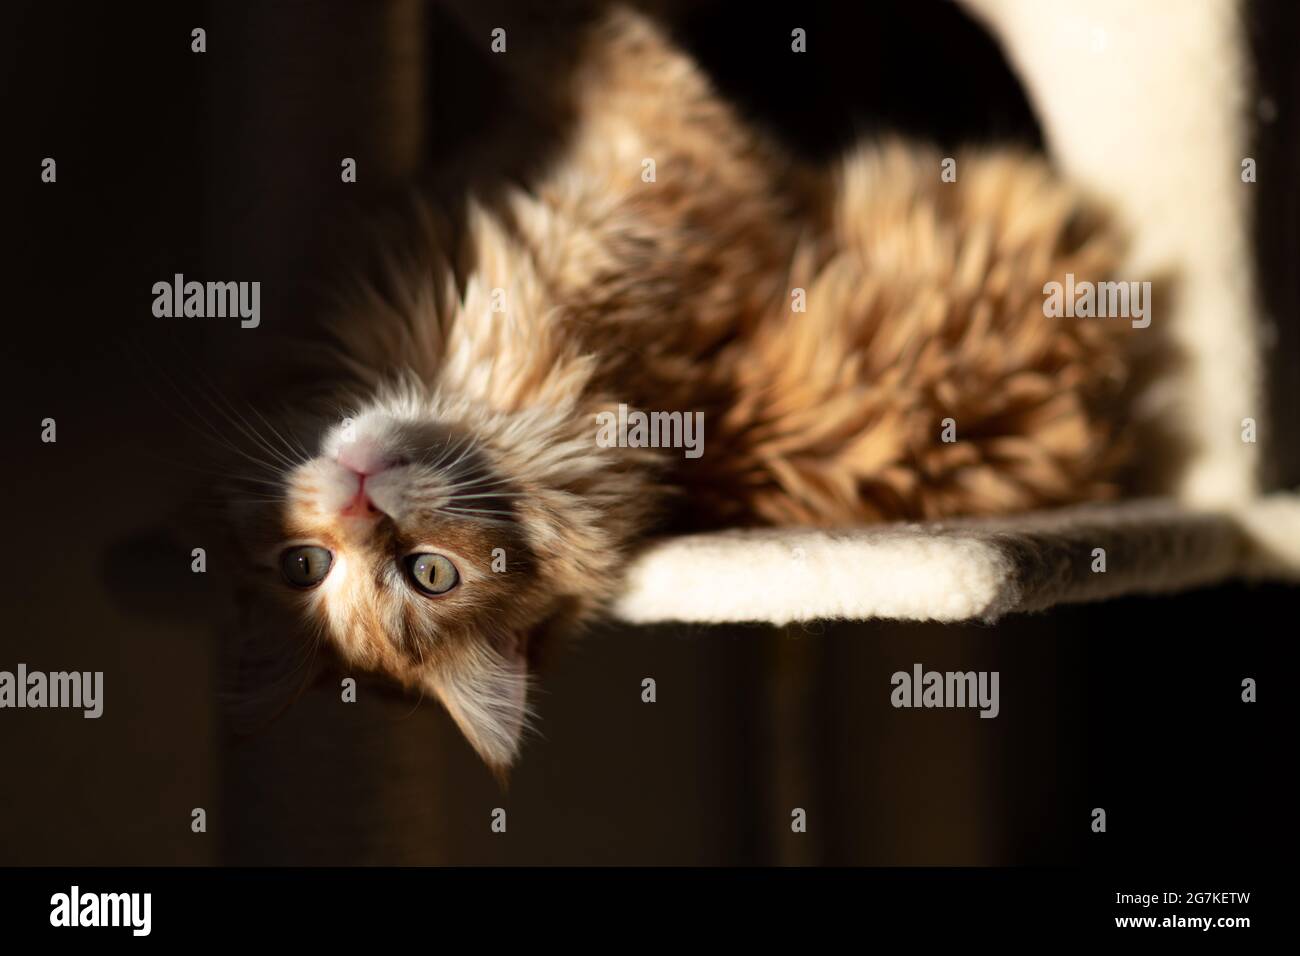 Productos para gatos fotografías e imágenes de alta resolución